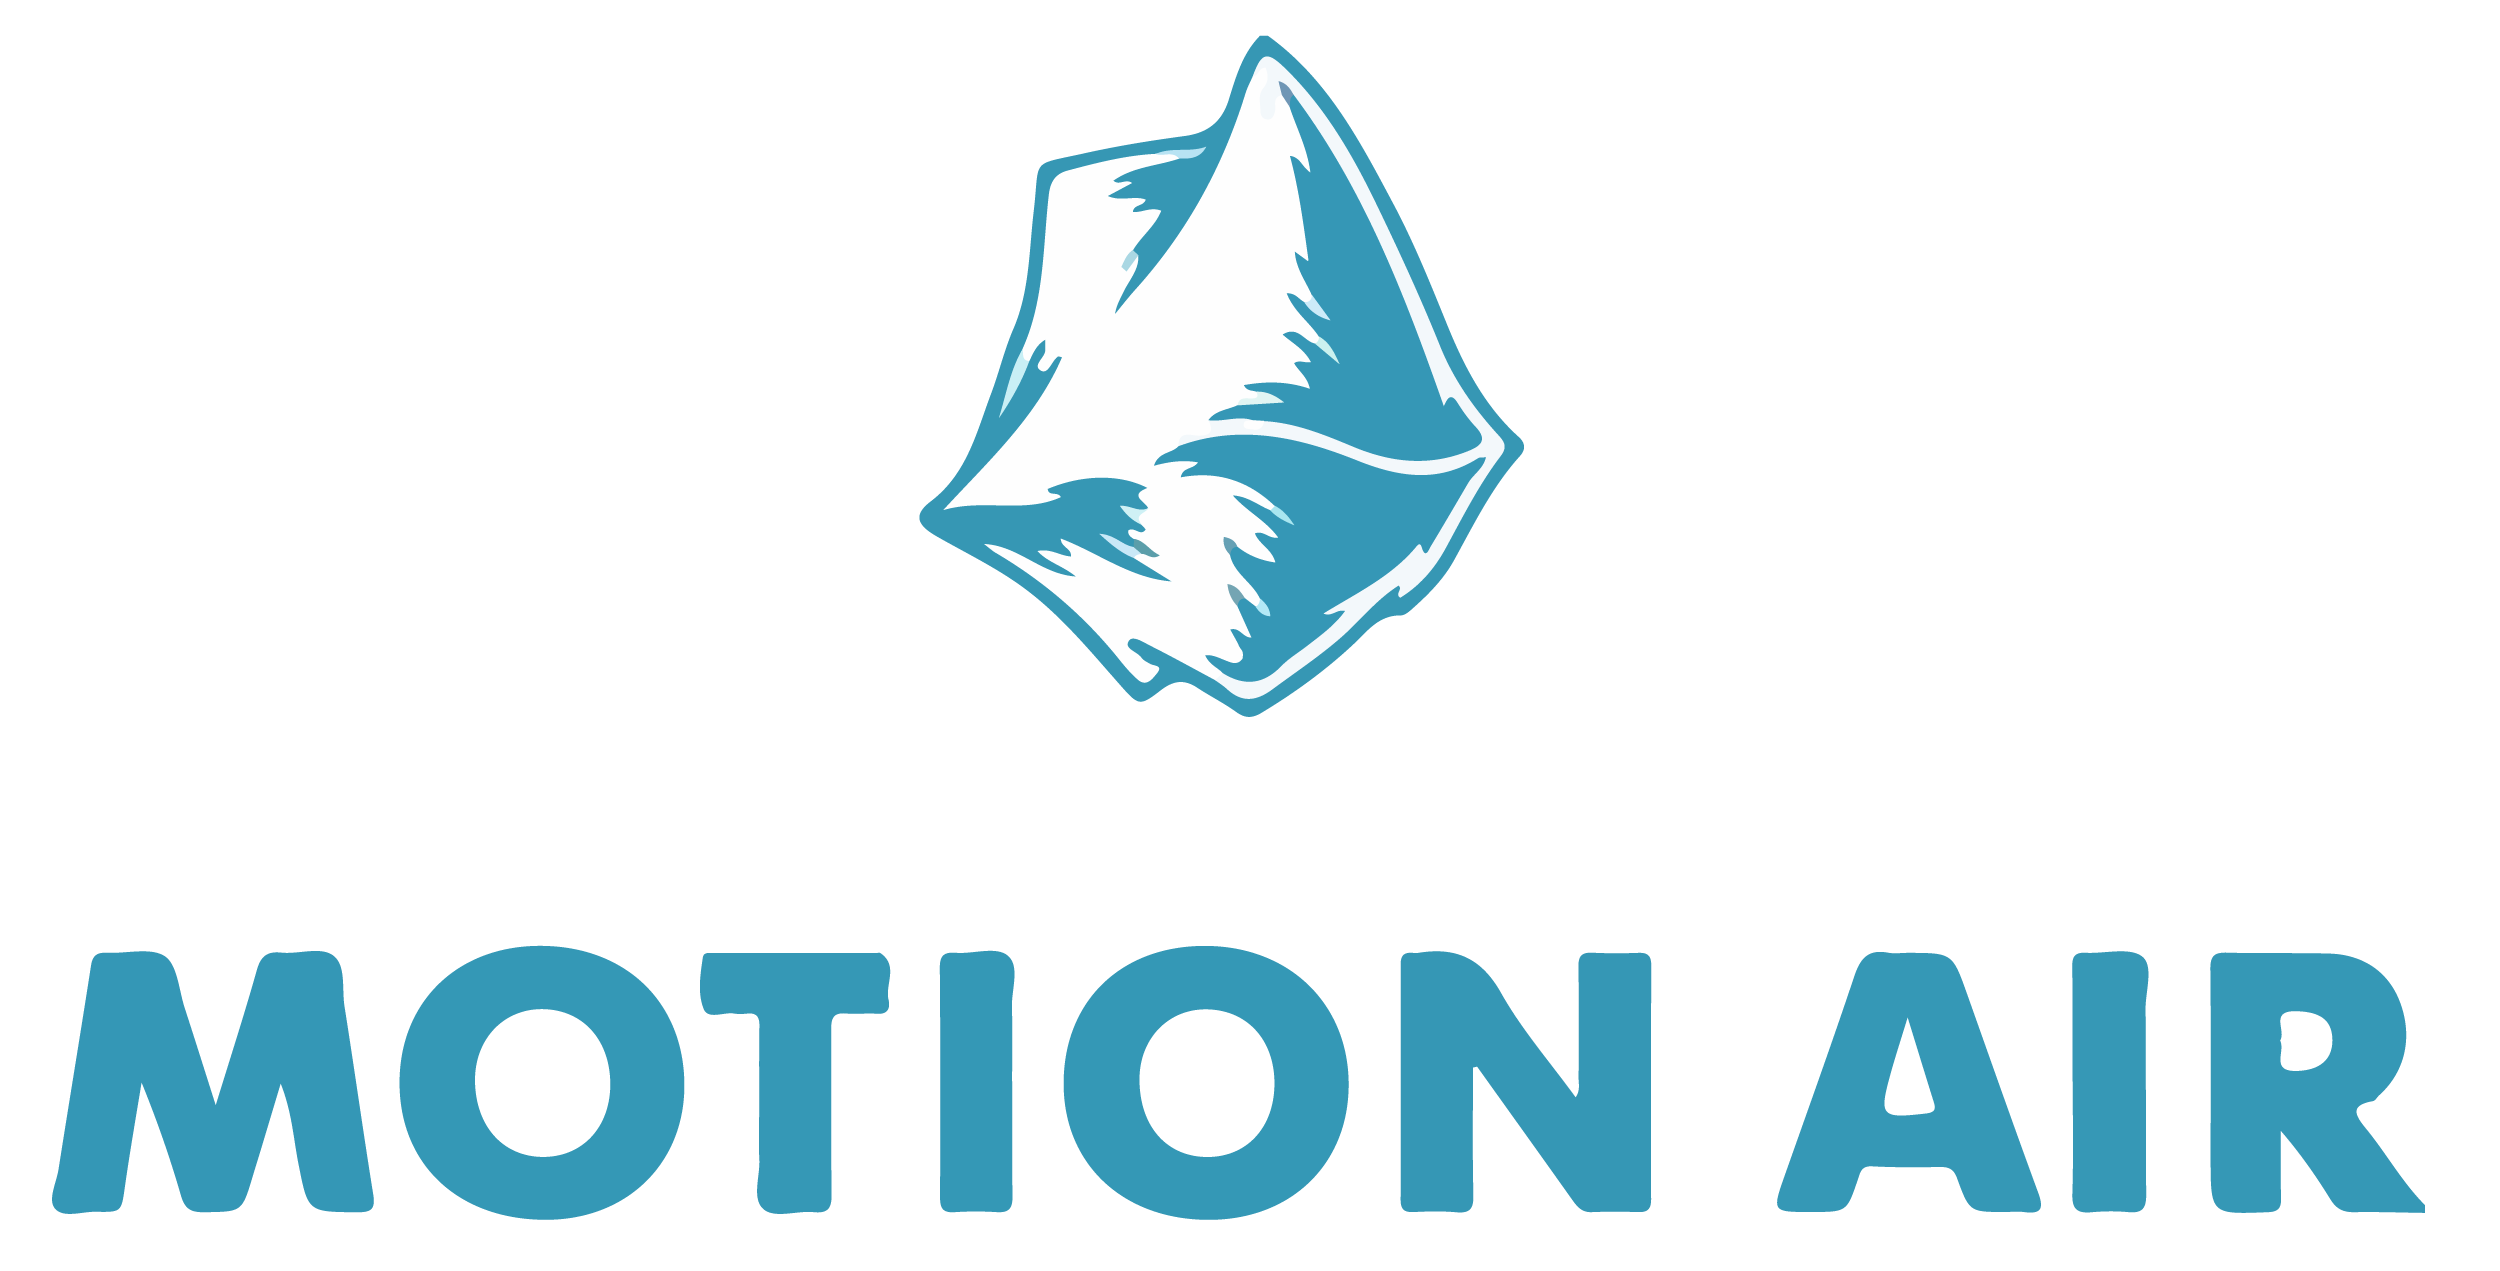 Motion air collaboration partner logo